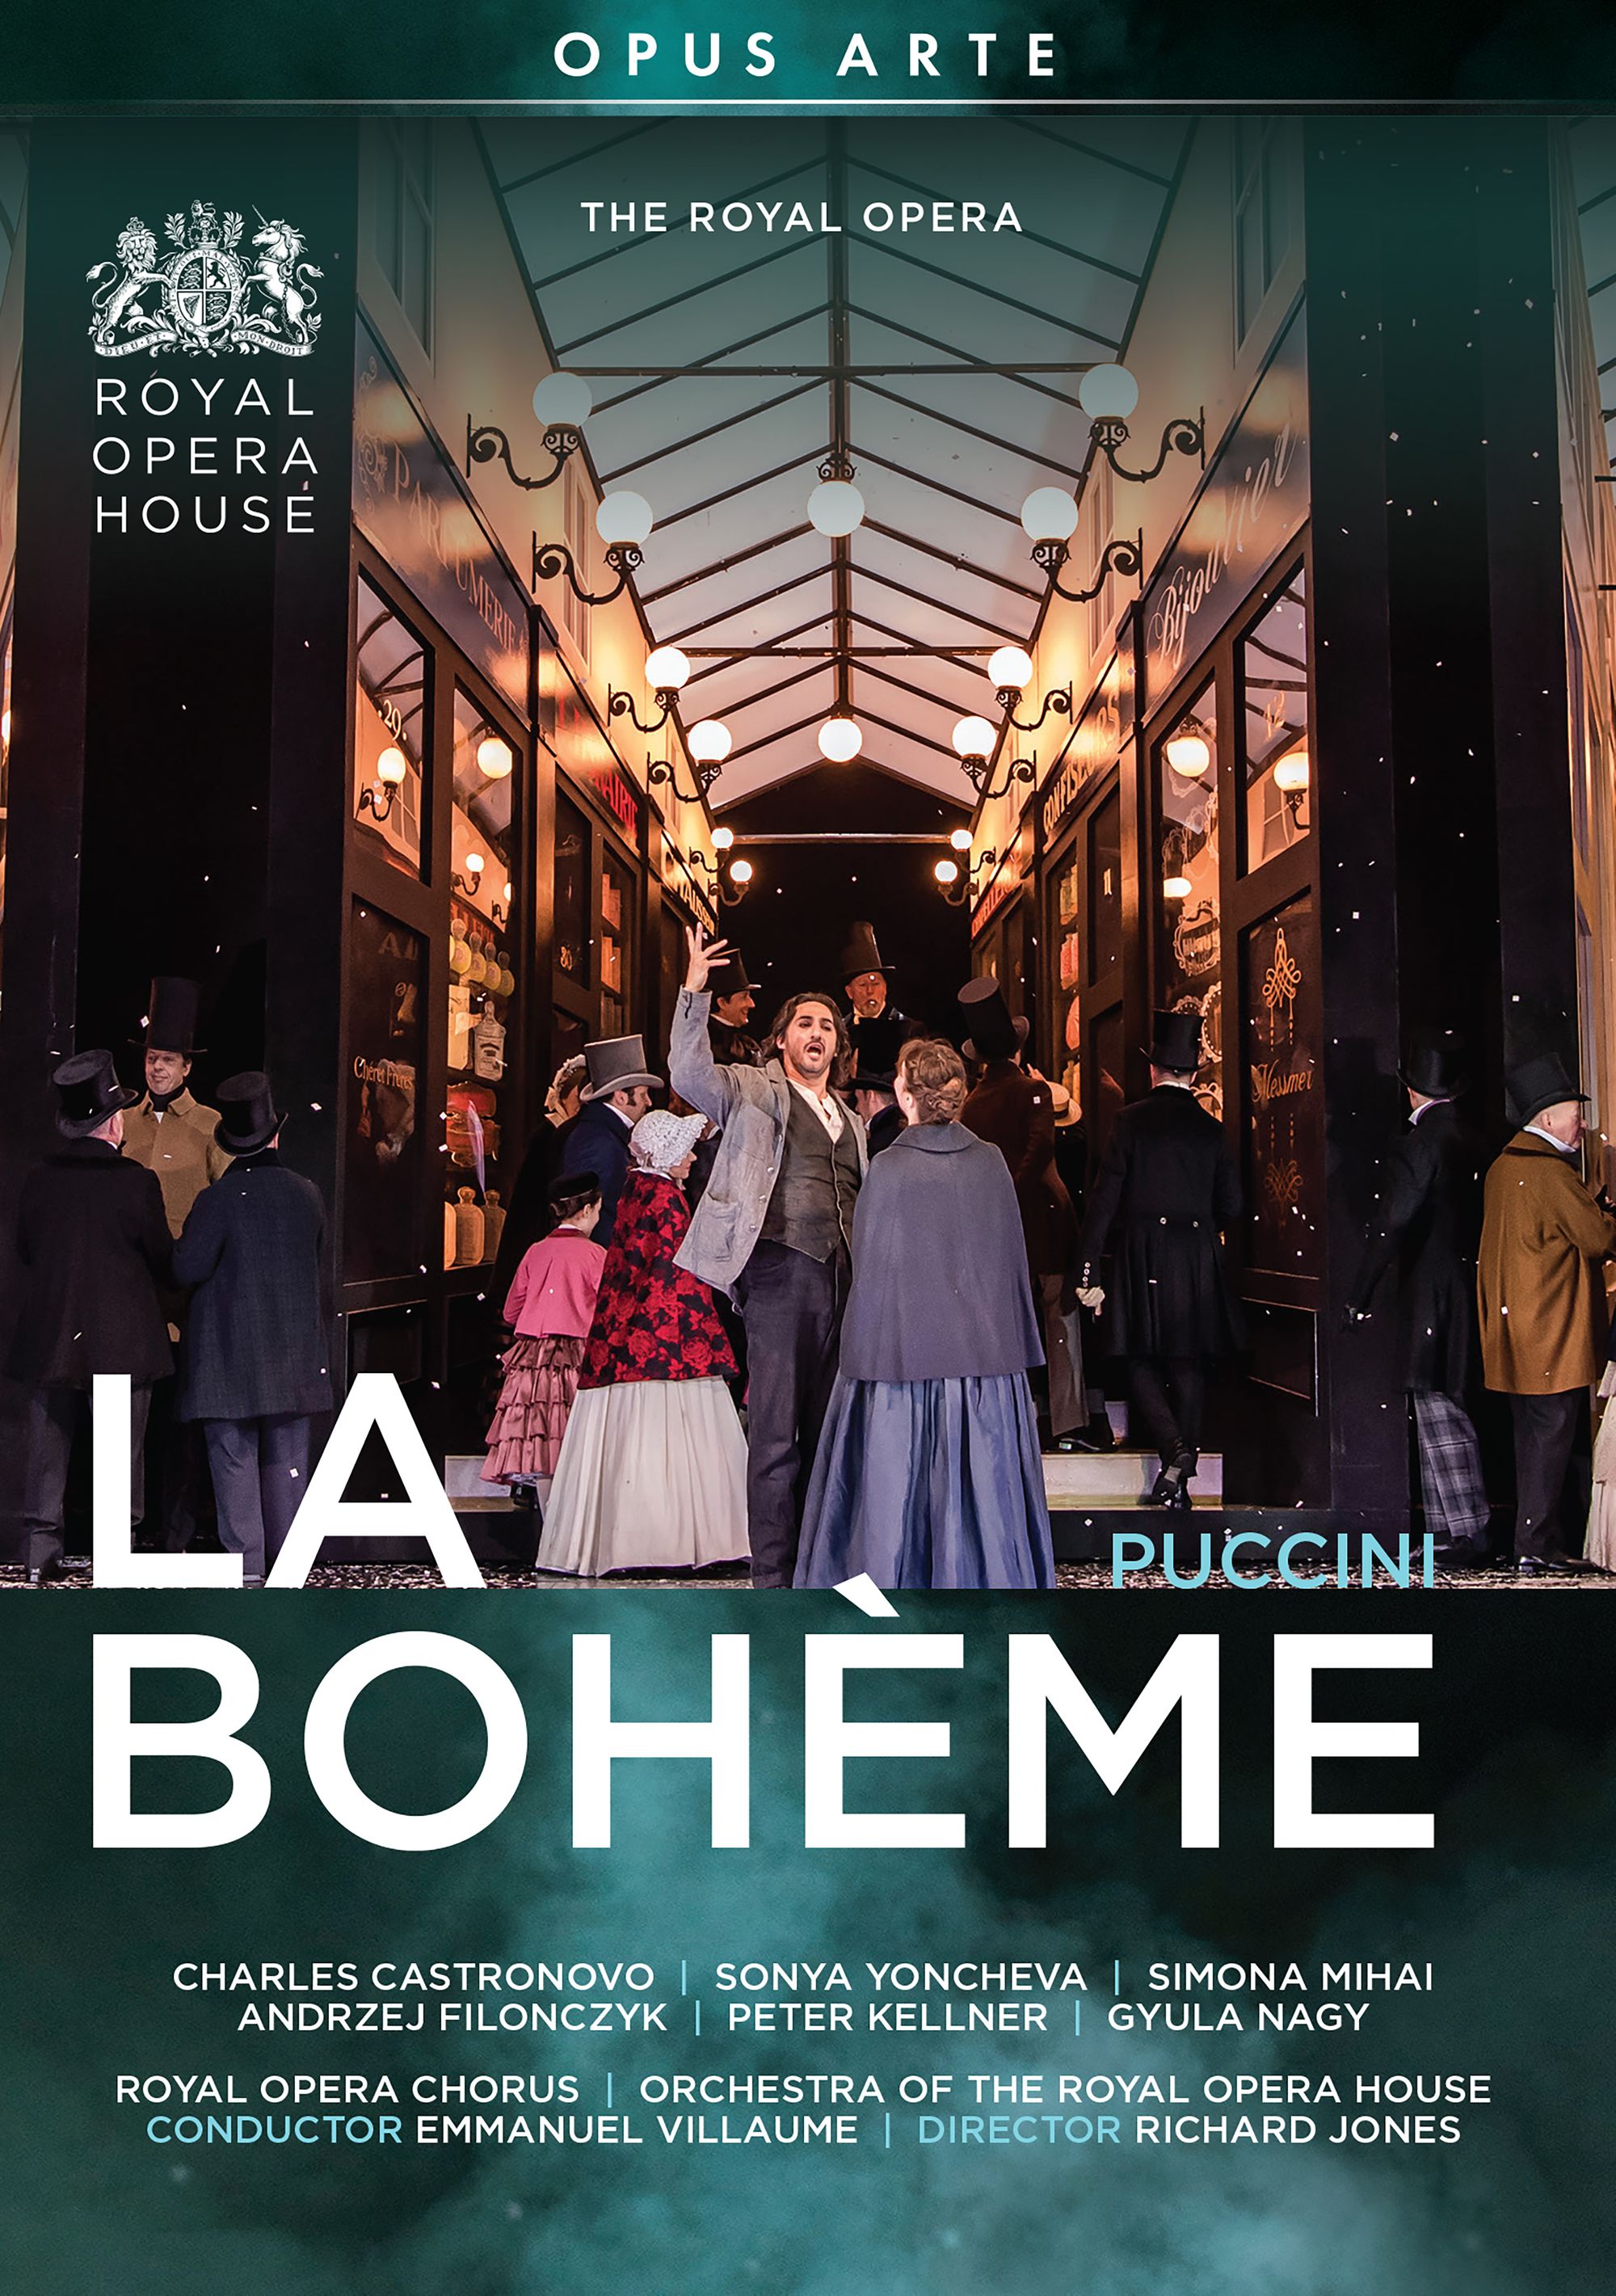 Puccini La bohème at Covent Garden